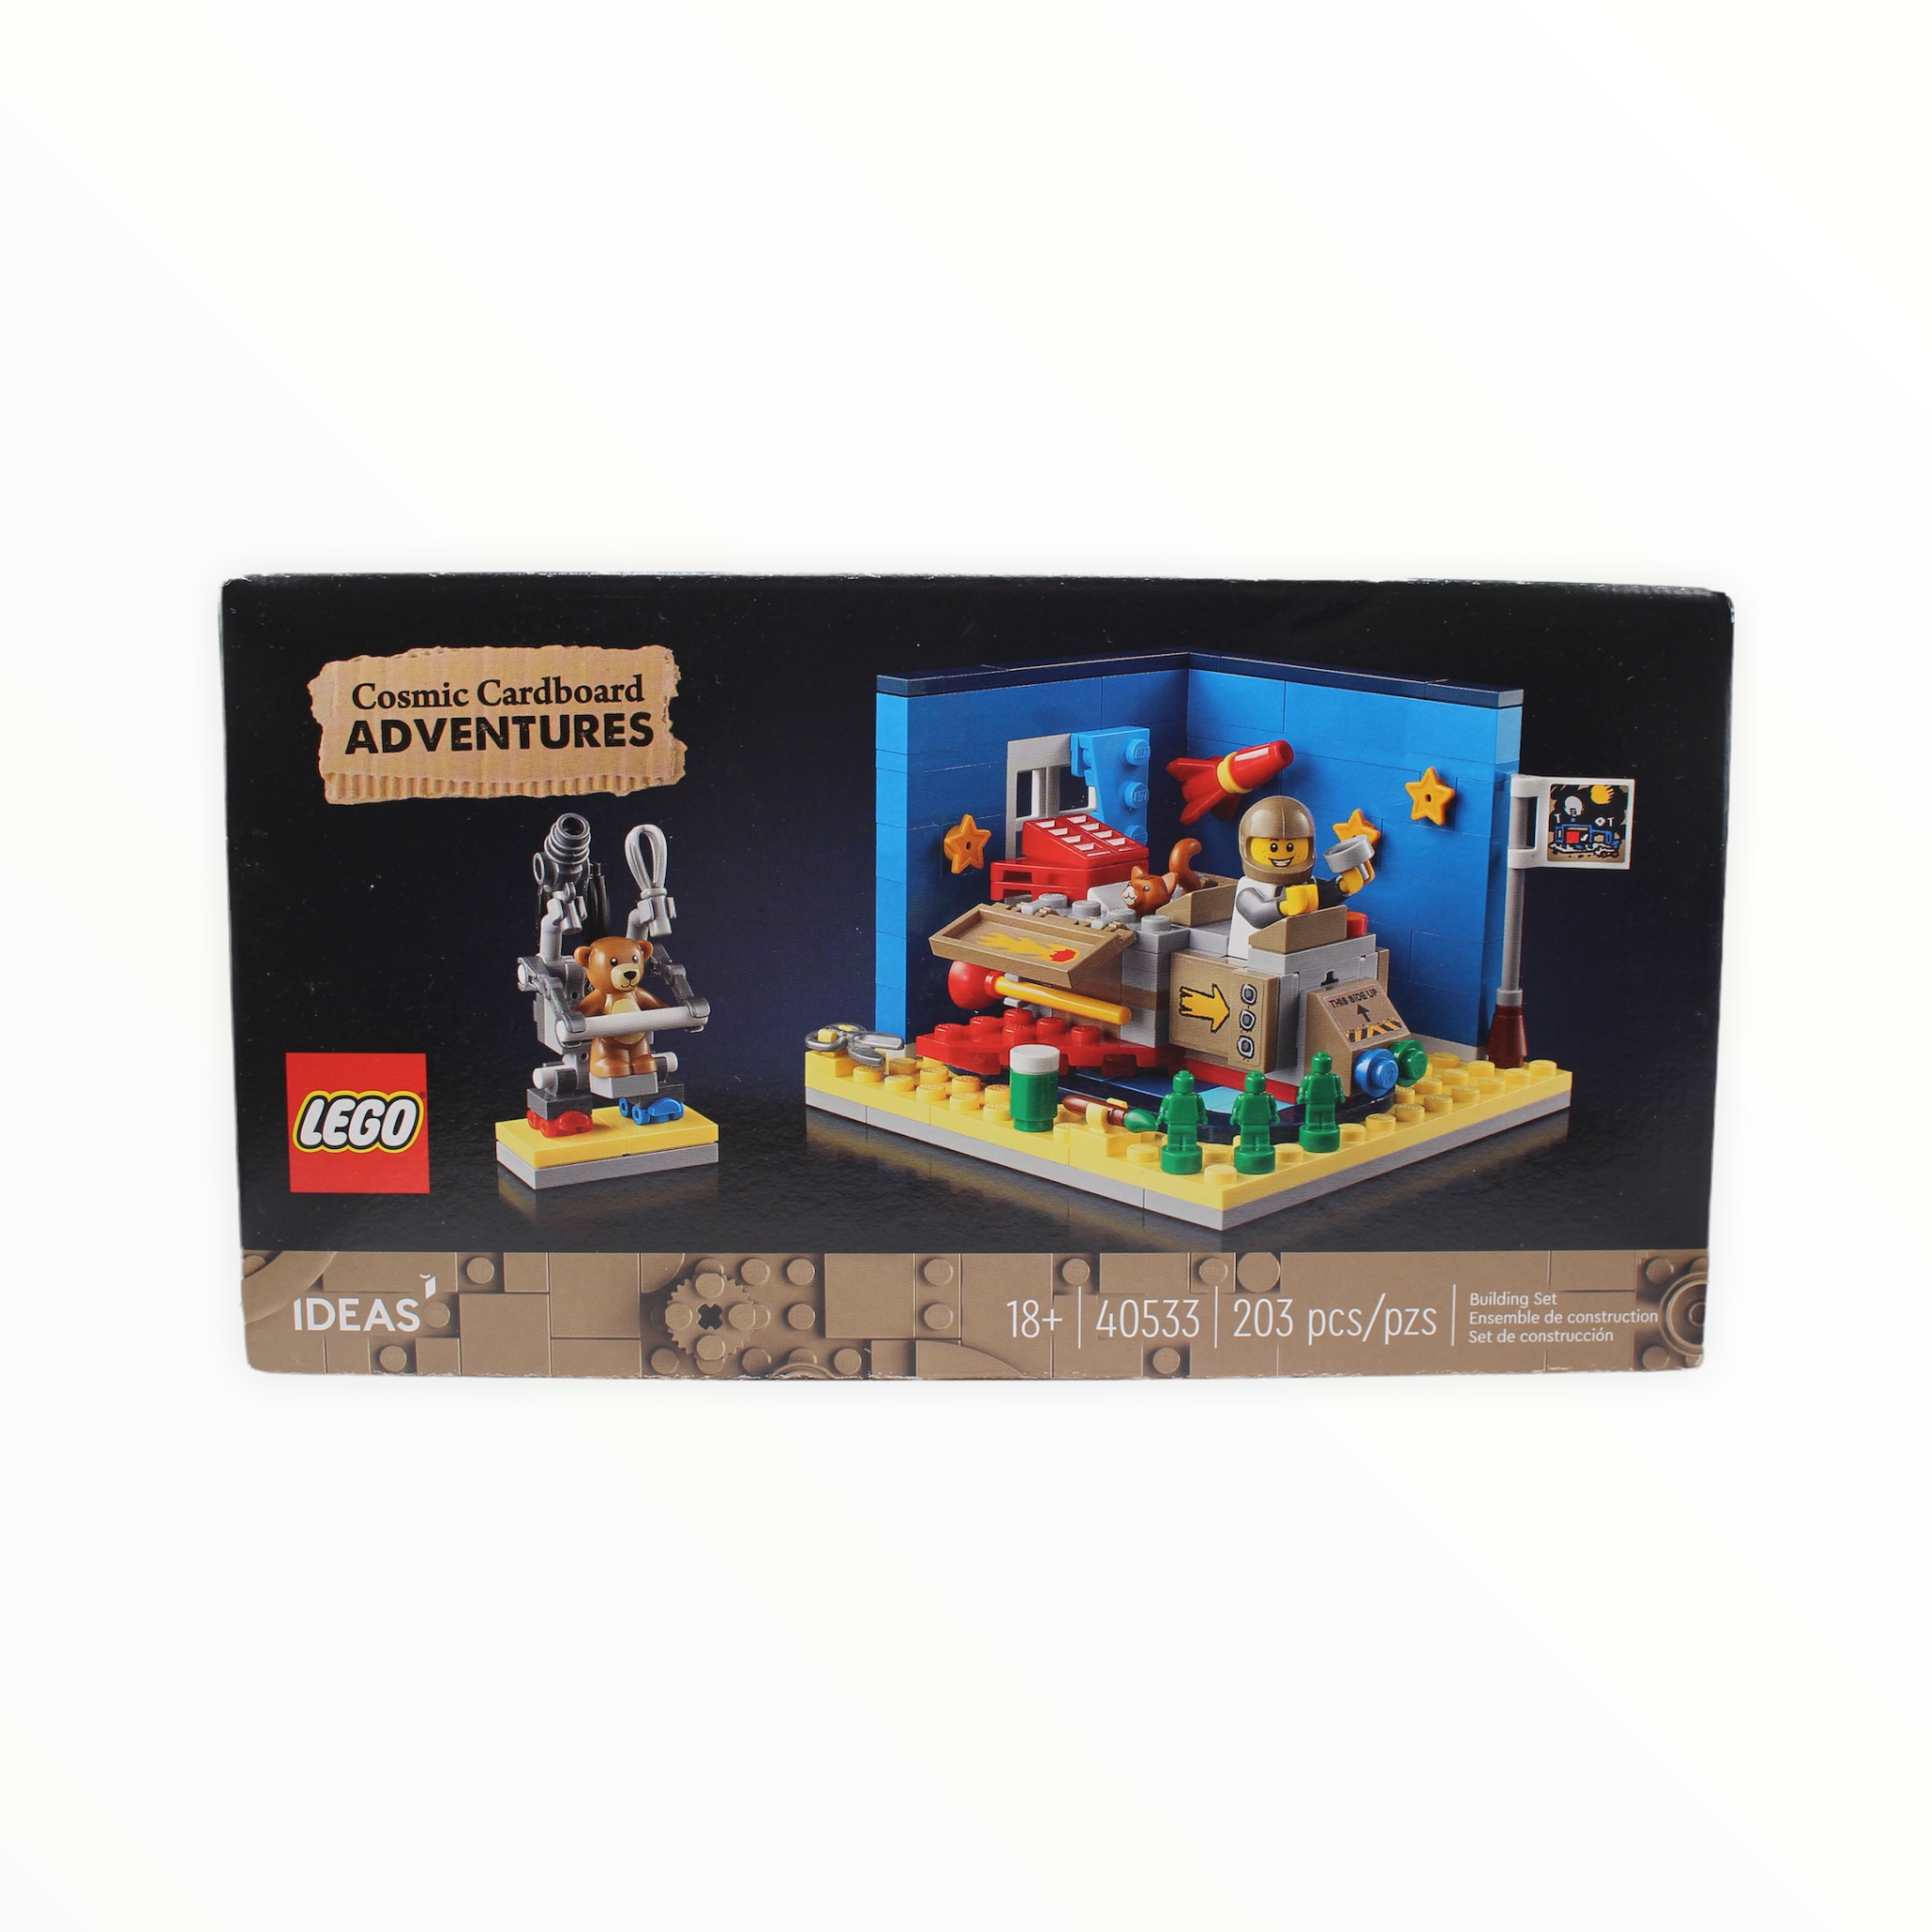 Retired Set 40533 LEGO Cosmic Cardboard Adventures